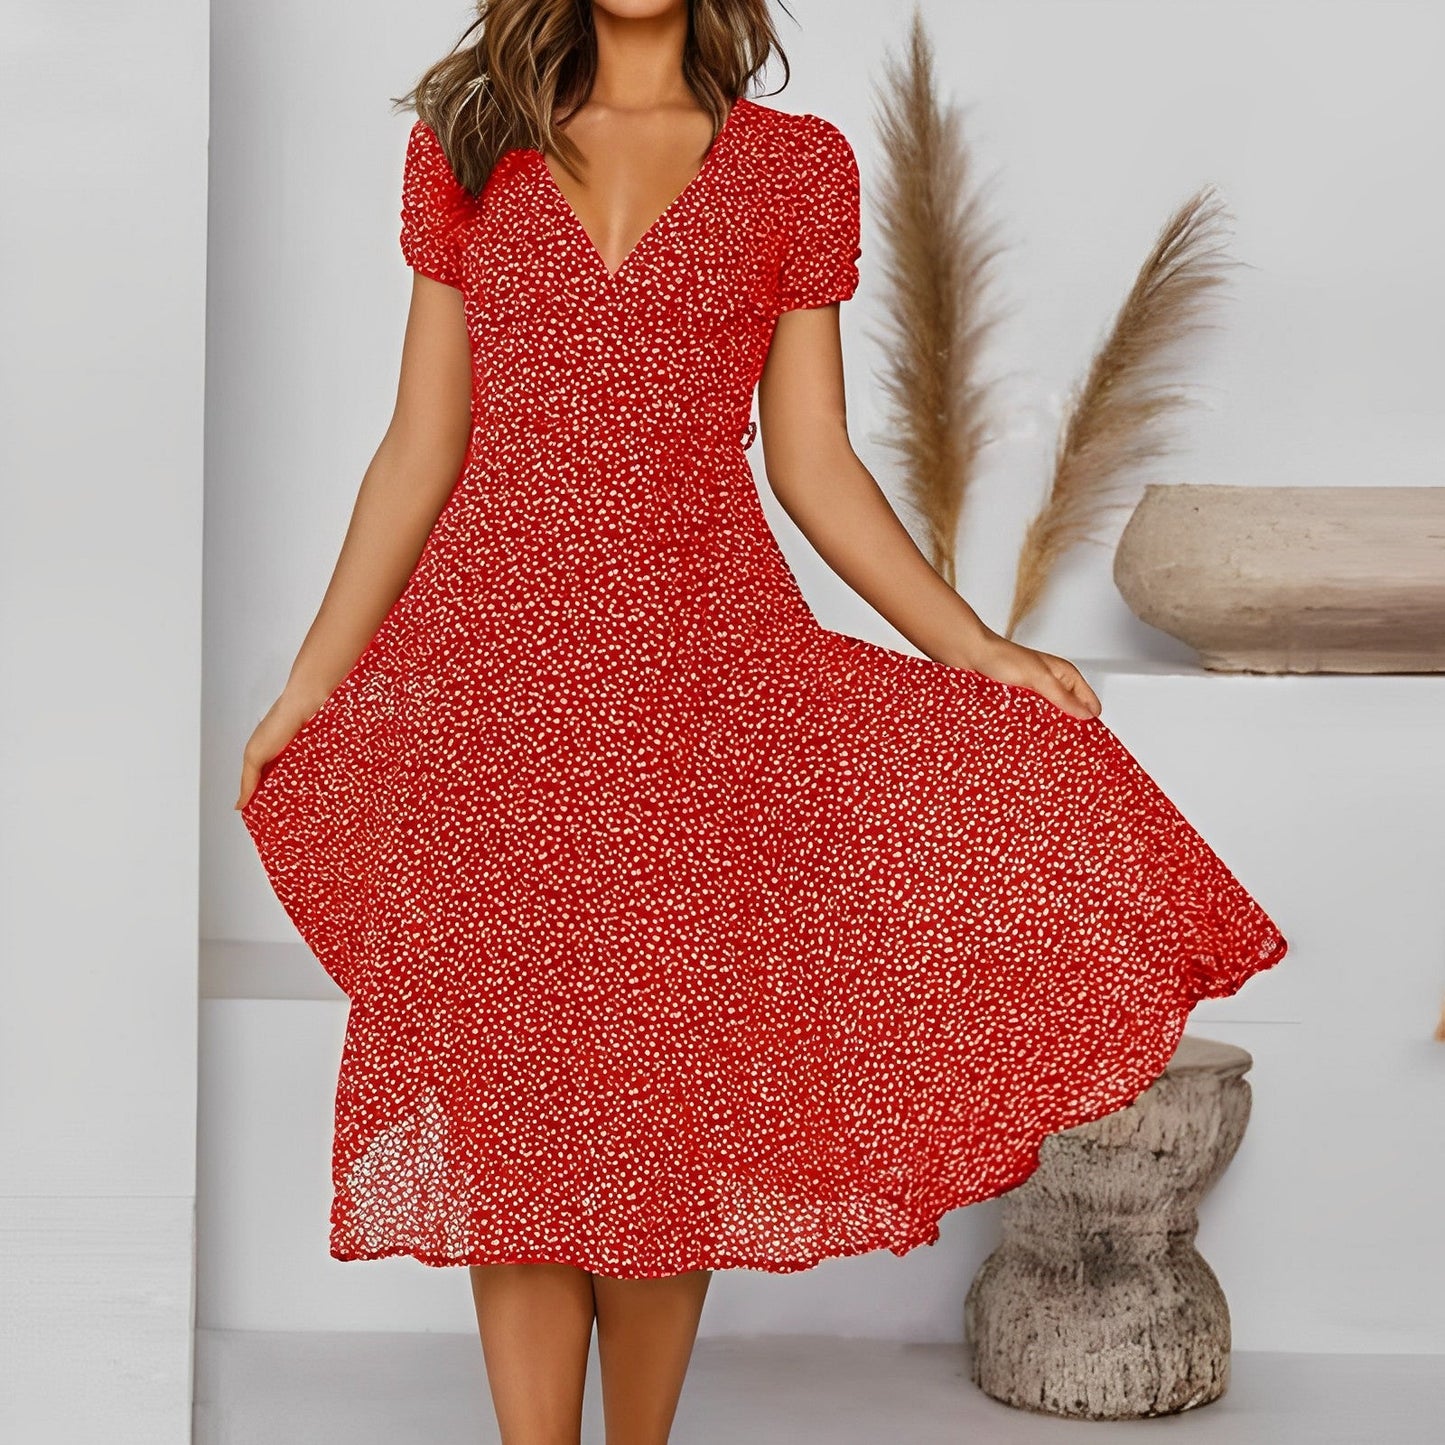 Lucia Comér - Elegant red summer dress